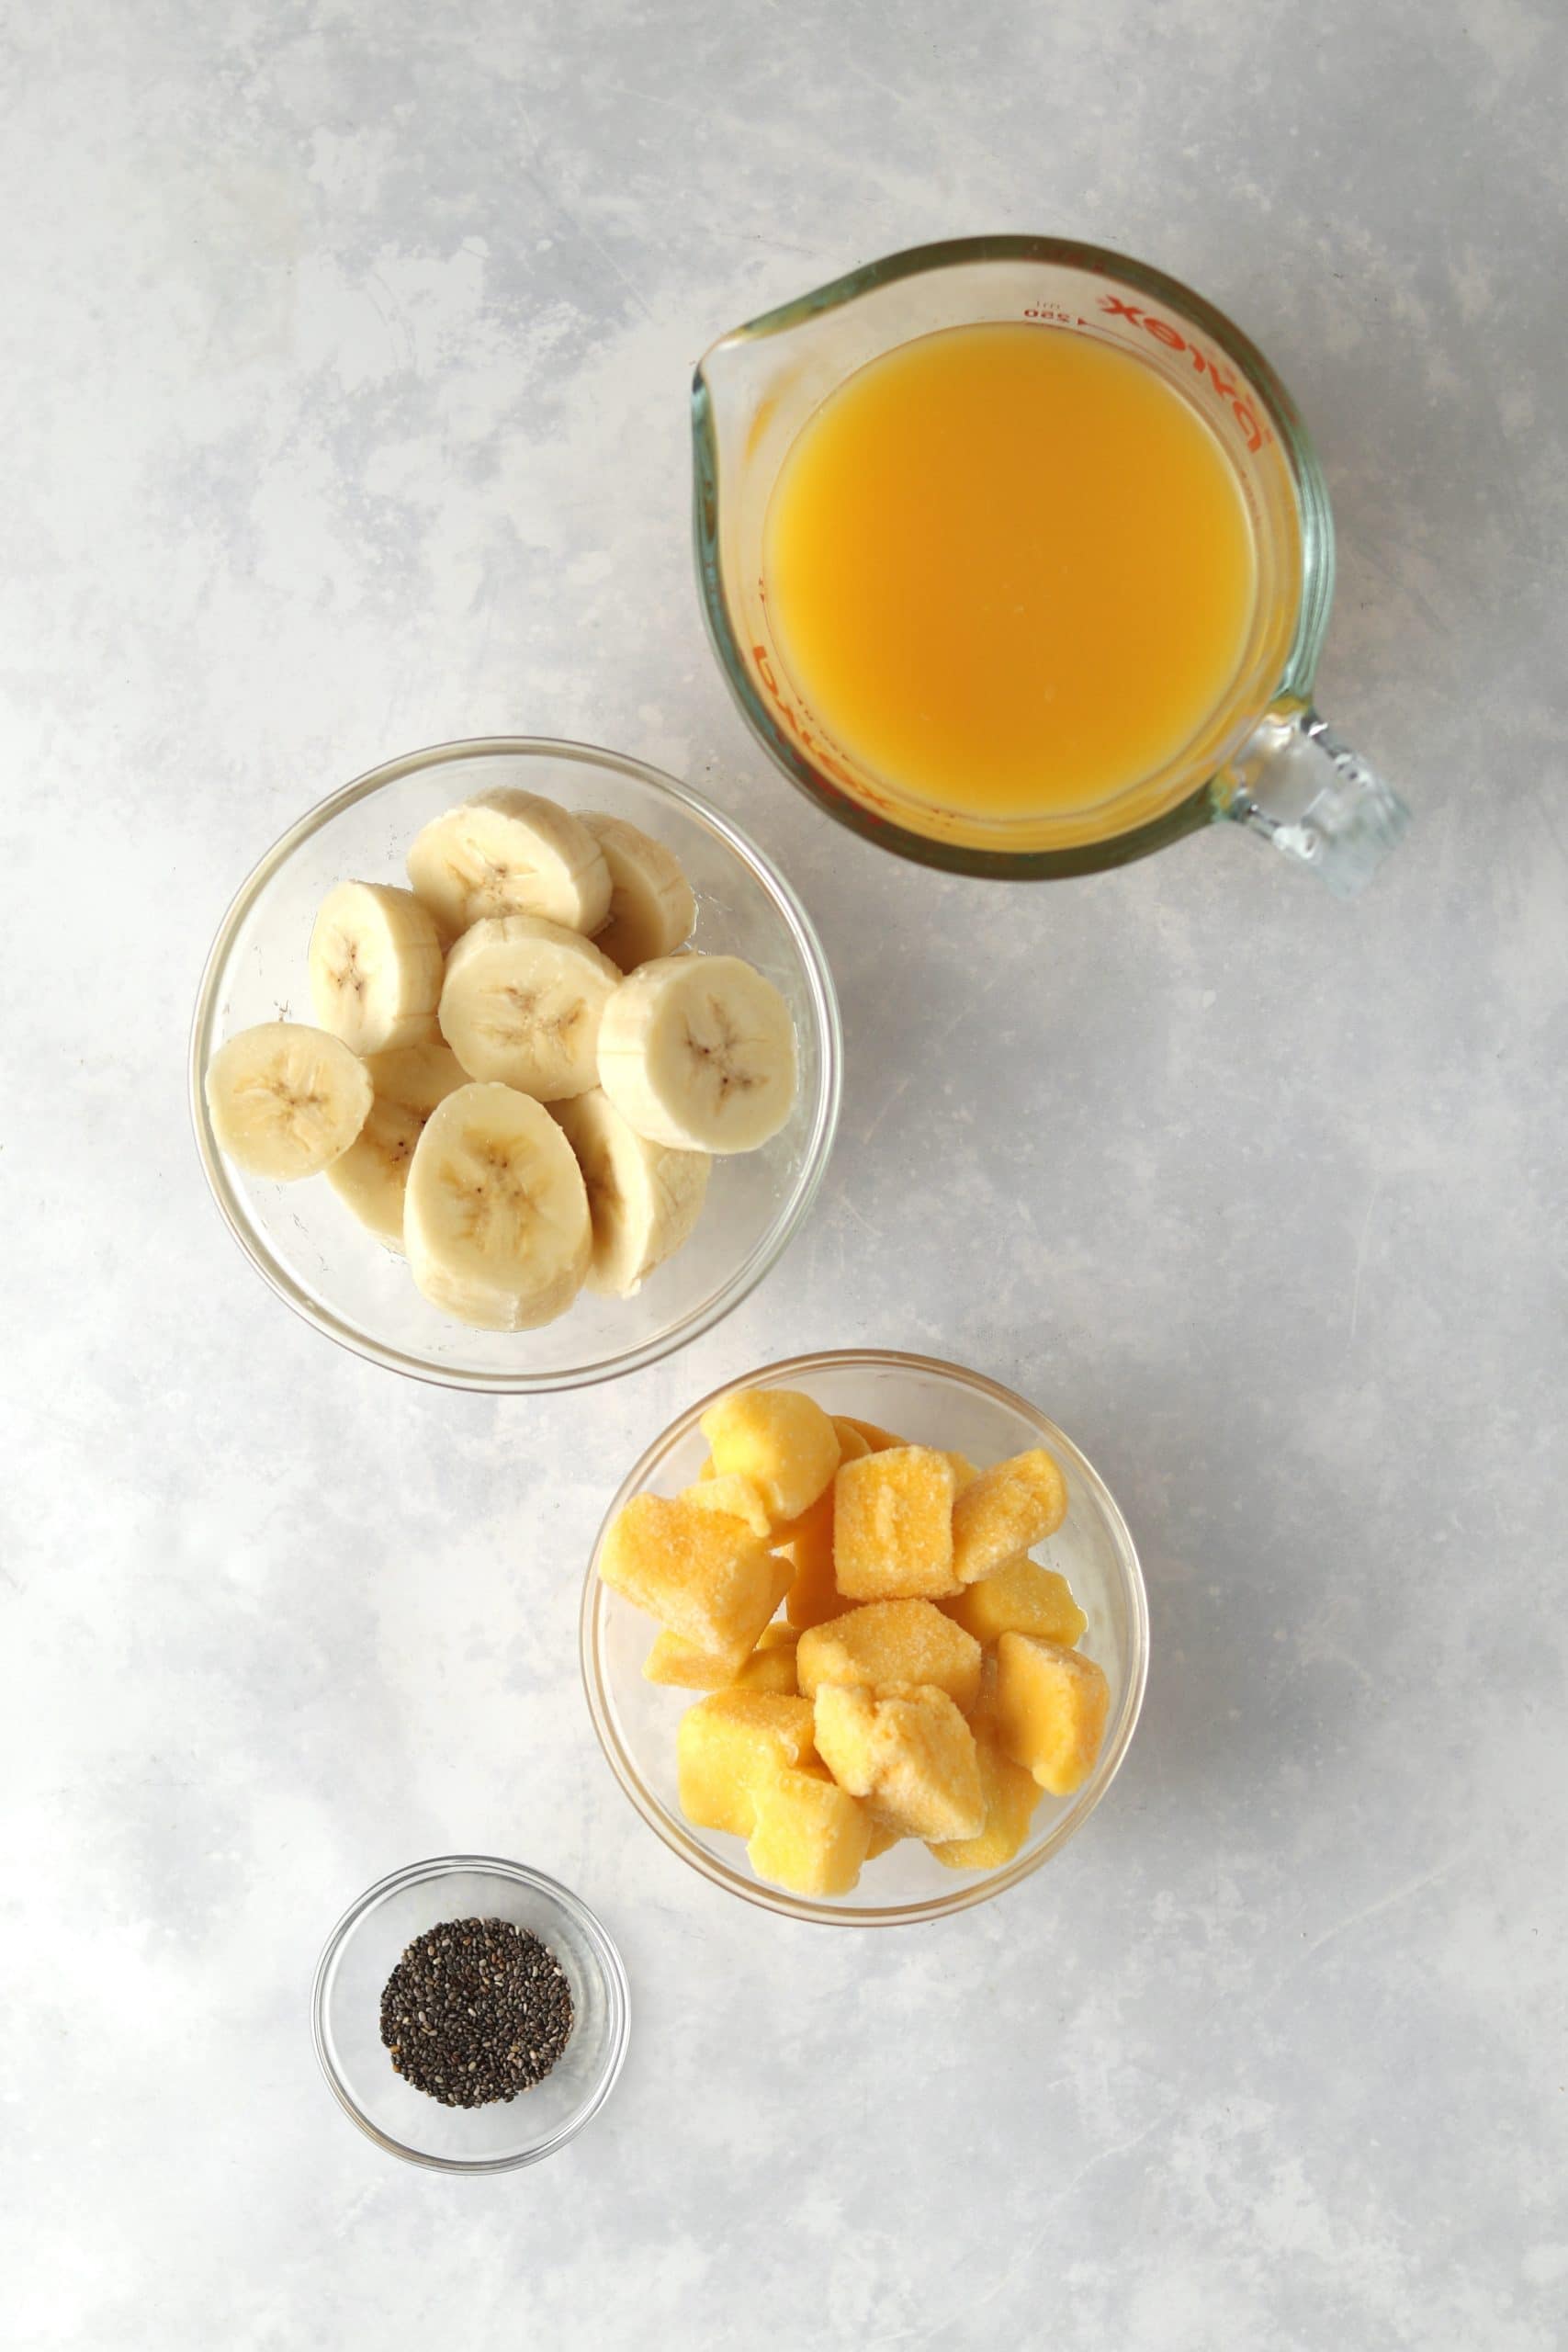 Orange juice, sliced bananas, diced mango, and chia seeds in bowls